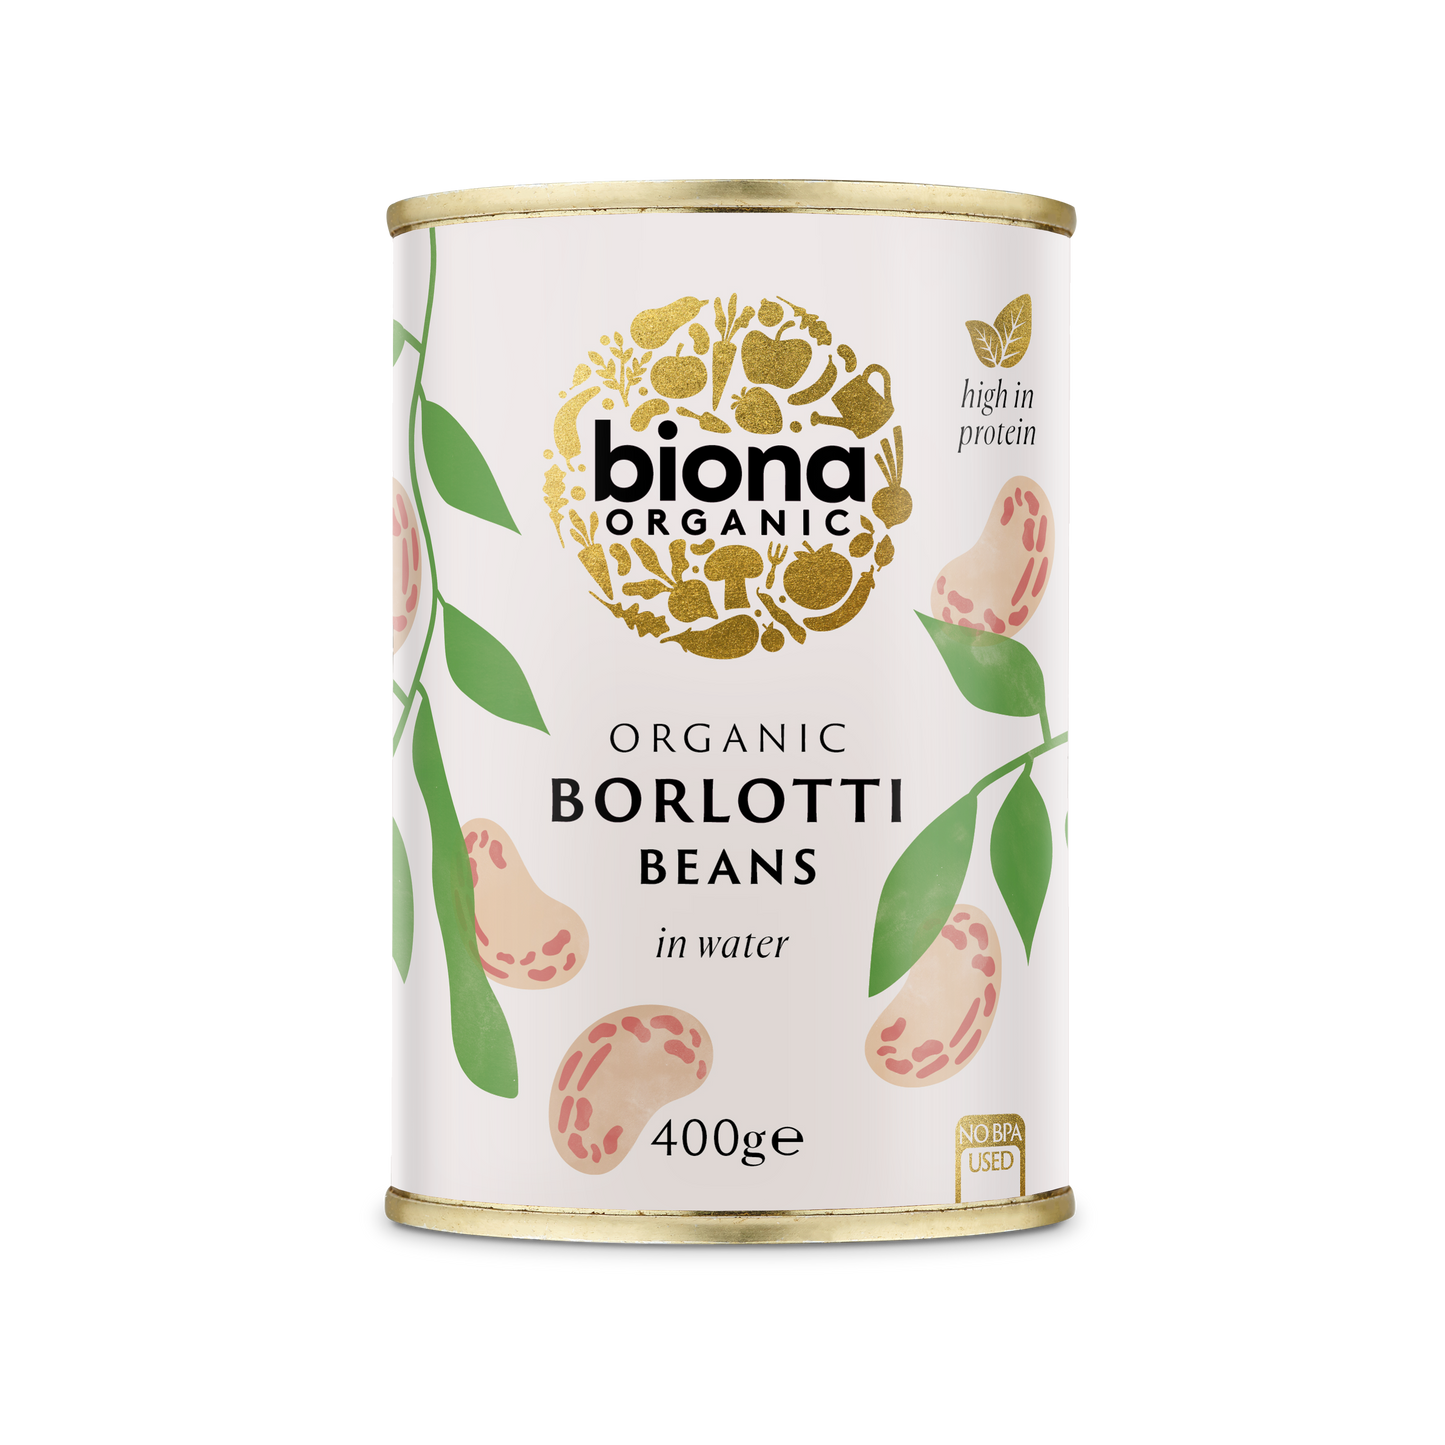 Biona Organic Borlotti Beans 400g Pack of 6